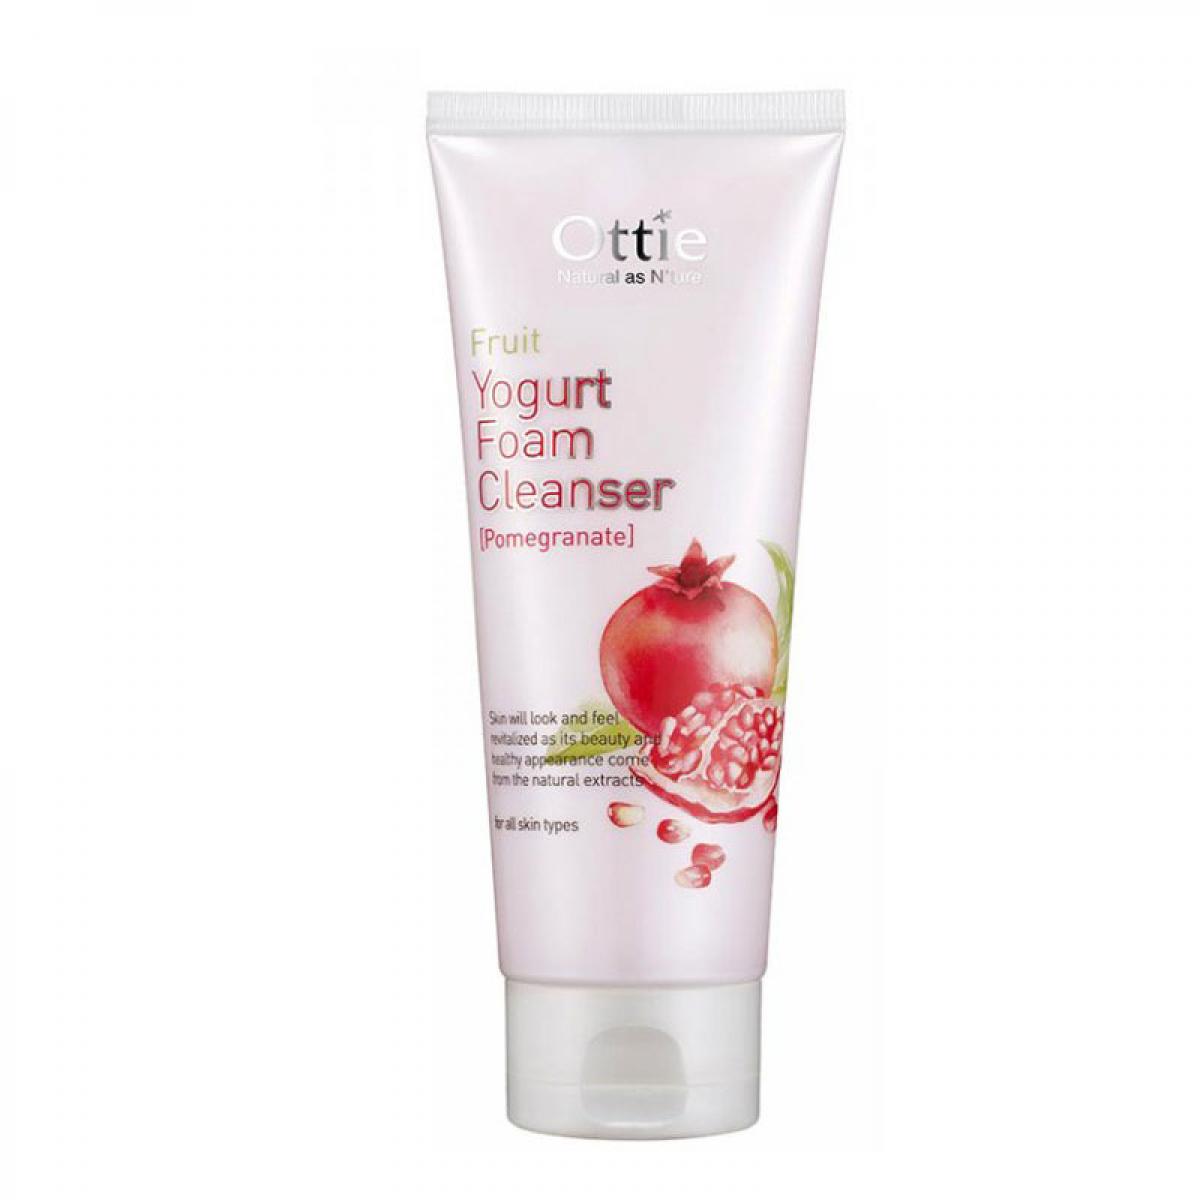 فوم ماست میوه ای انار - Yogurt foam cleanser pomegranate